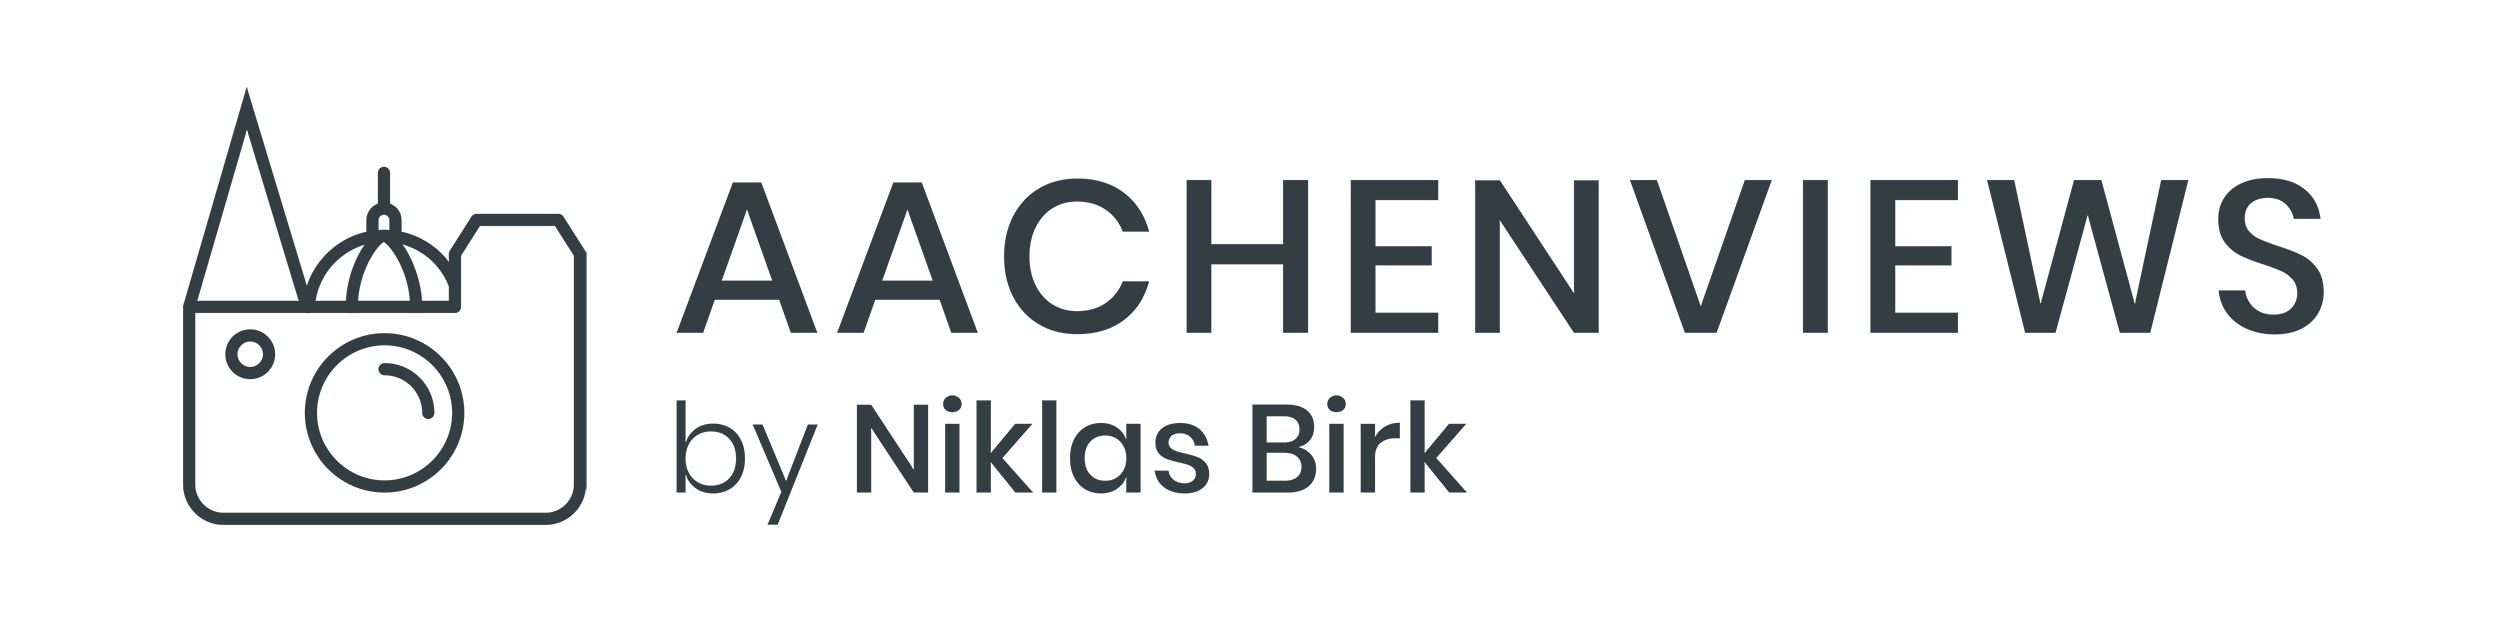 aachenviews